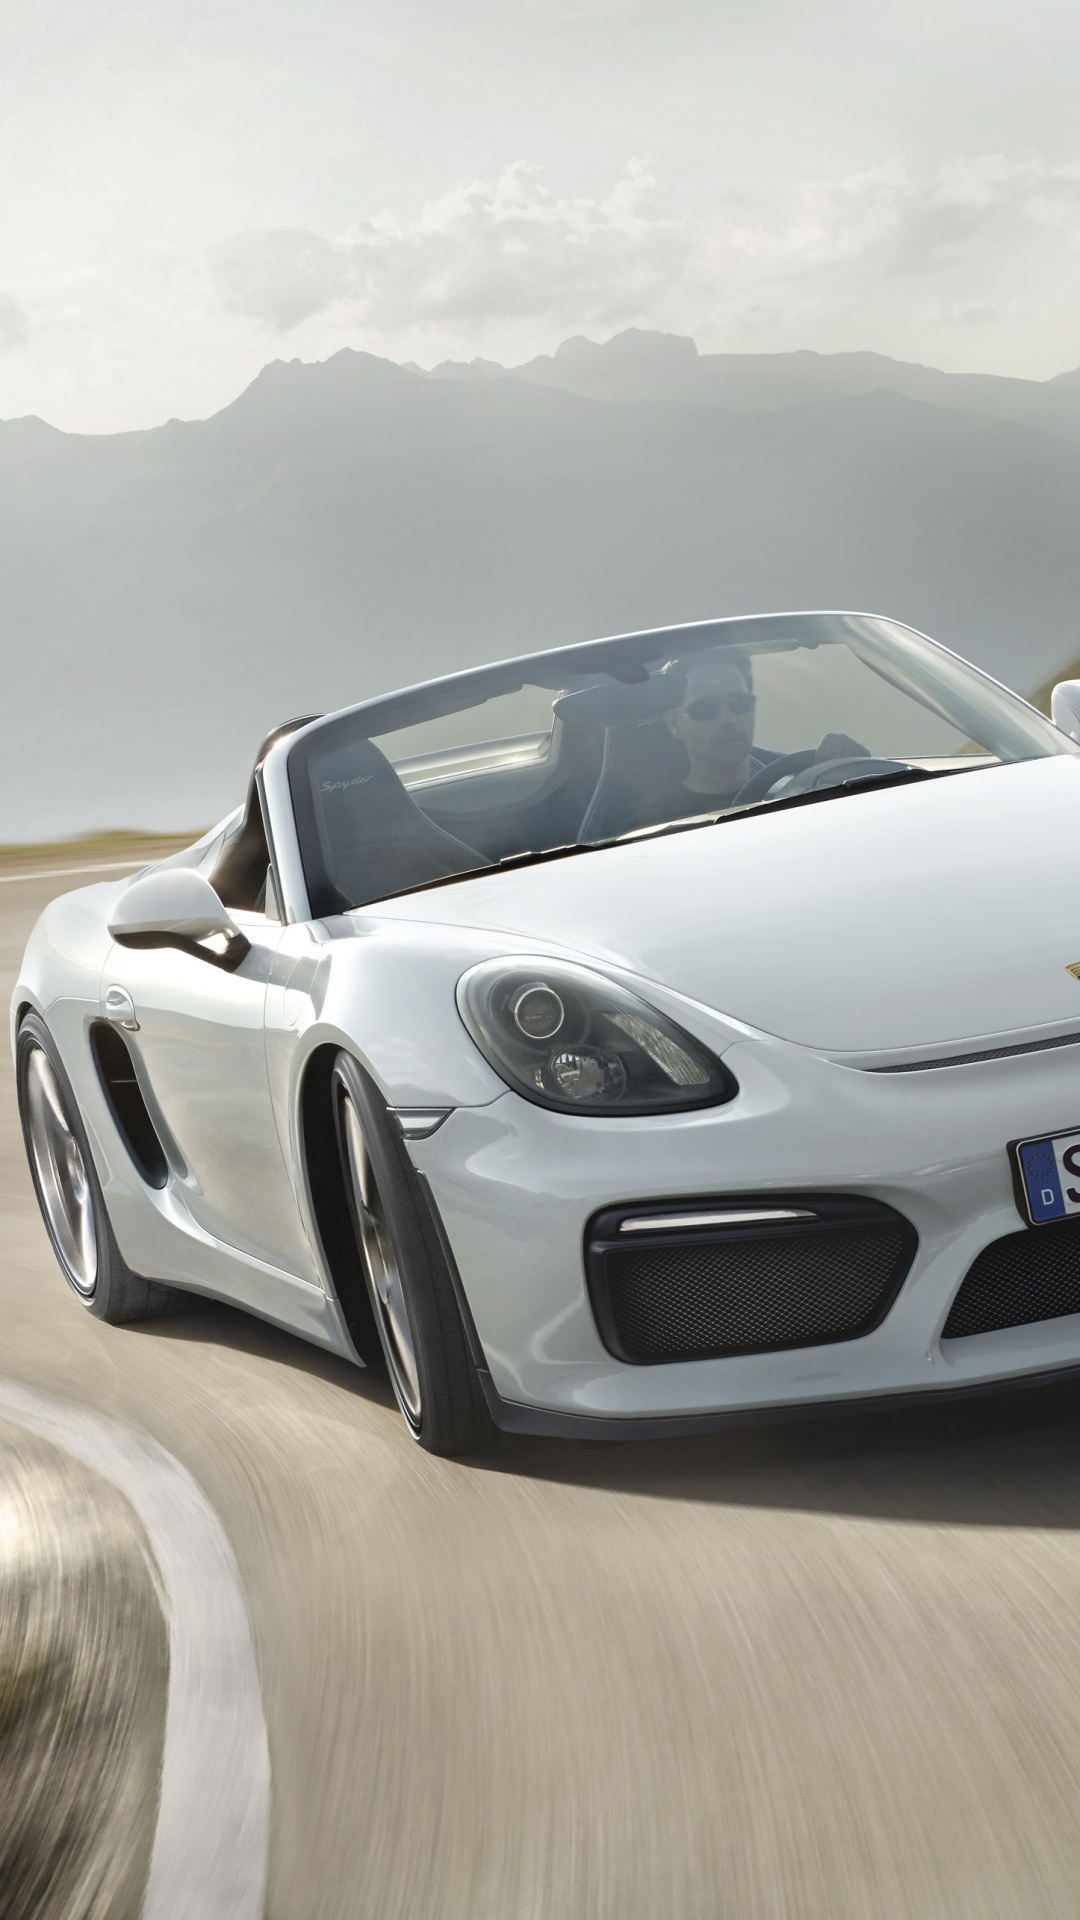 White Porsche 911 on Road During Daytime. Wallpaper in 1080x1920 Resolution